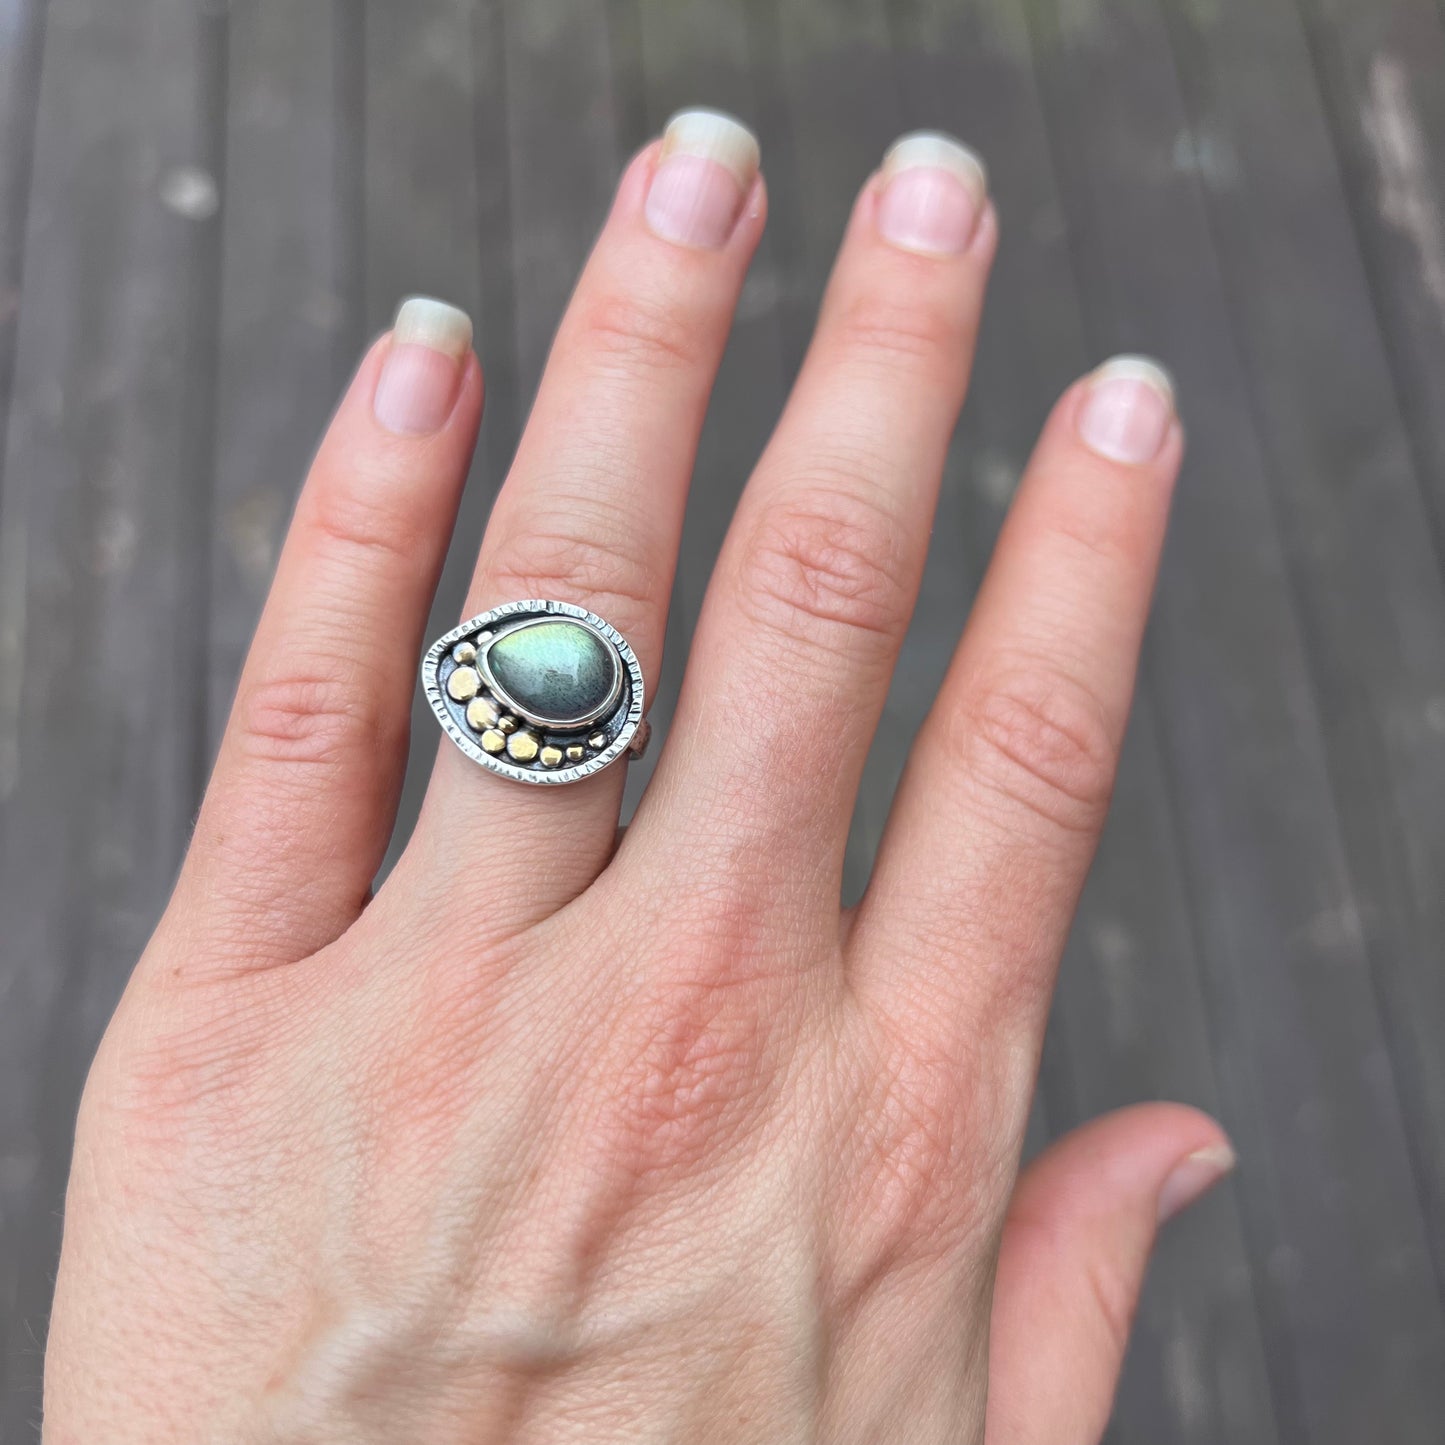 Labradorite Sterling Silver Ring - Handmade One-of-a-kind Labradorite Mixed Metal Ring